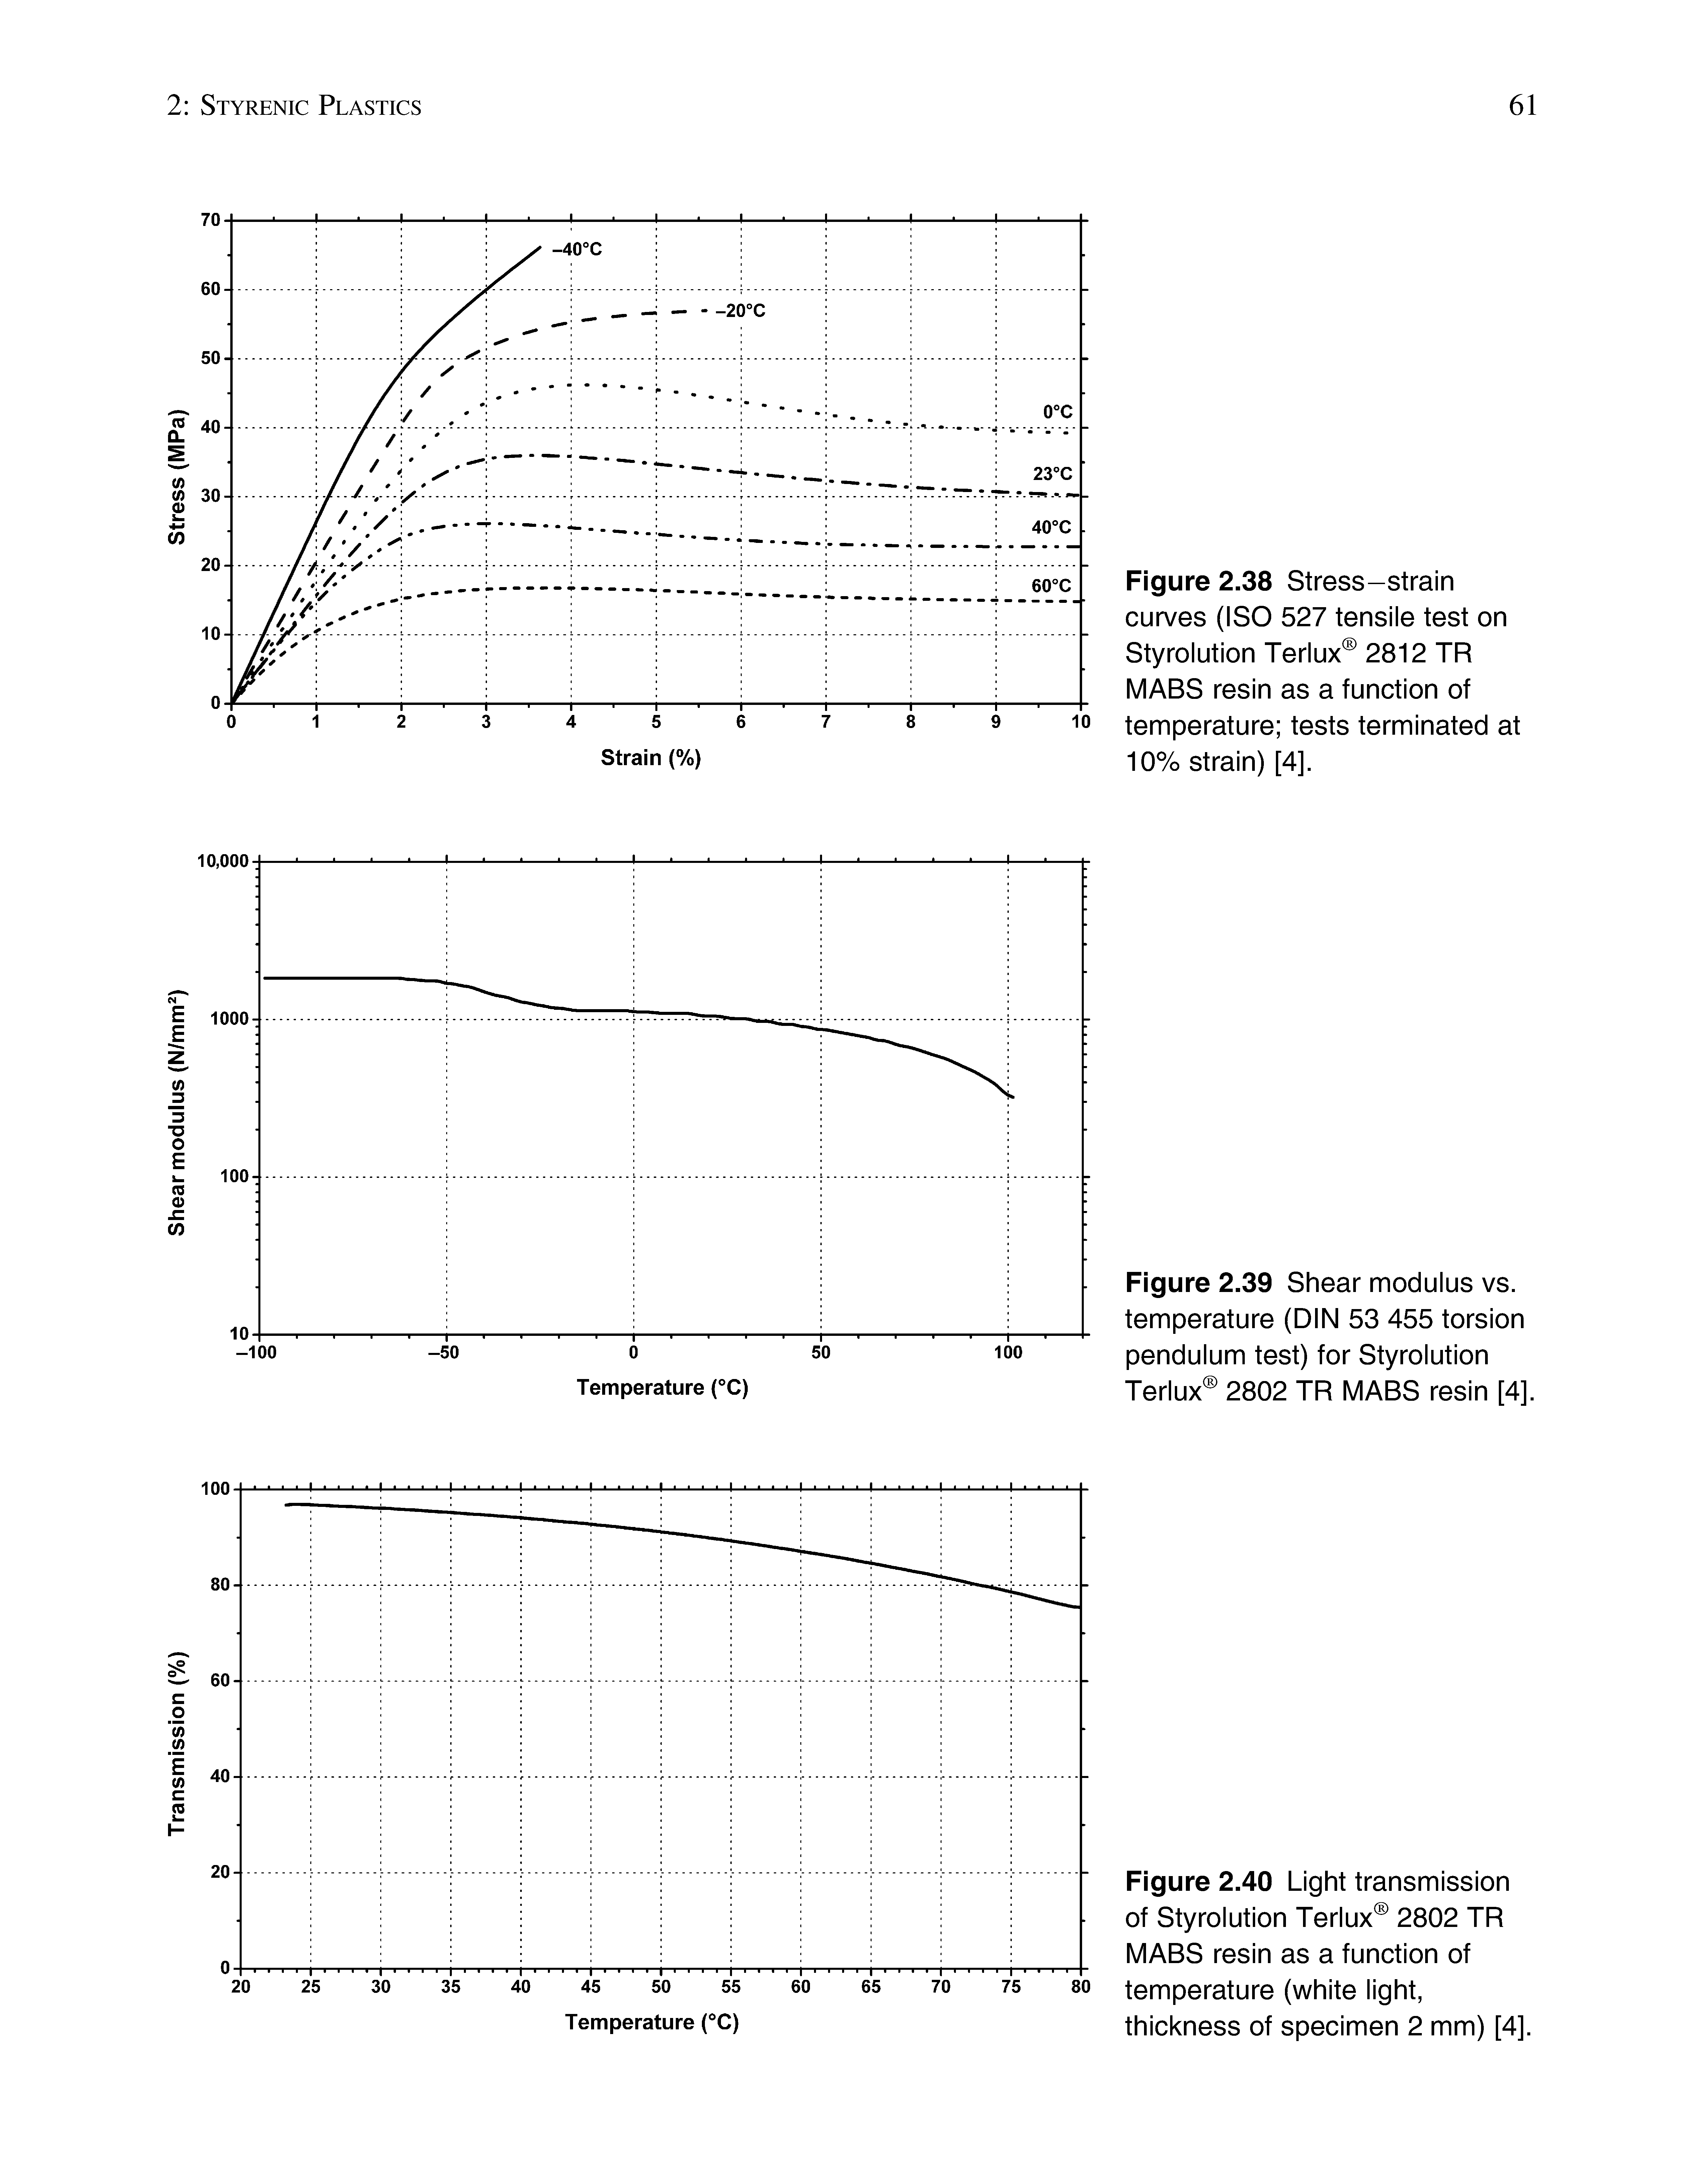 Figure 2.39 Shear modulus vs. temperature (DIN 53 455 torsion pendulum test) for Styrolution Terlux 2802 TR MASS resin [4],...